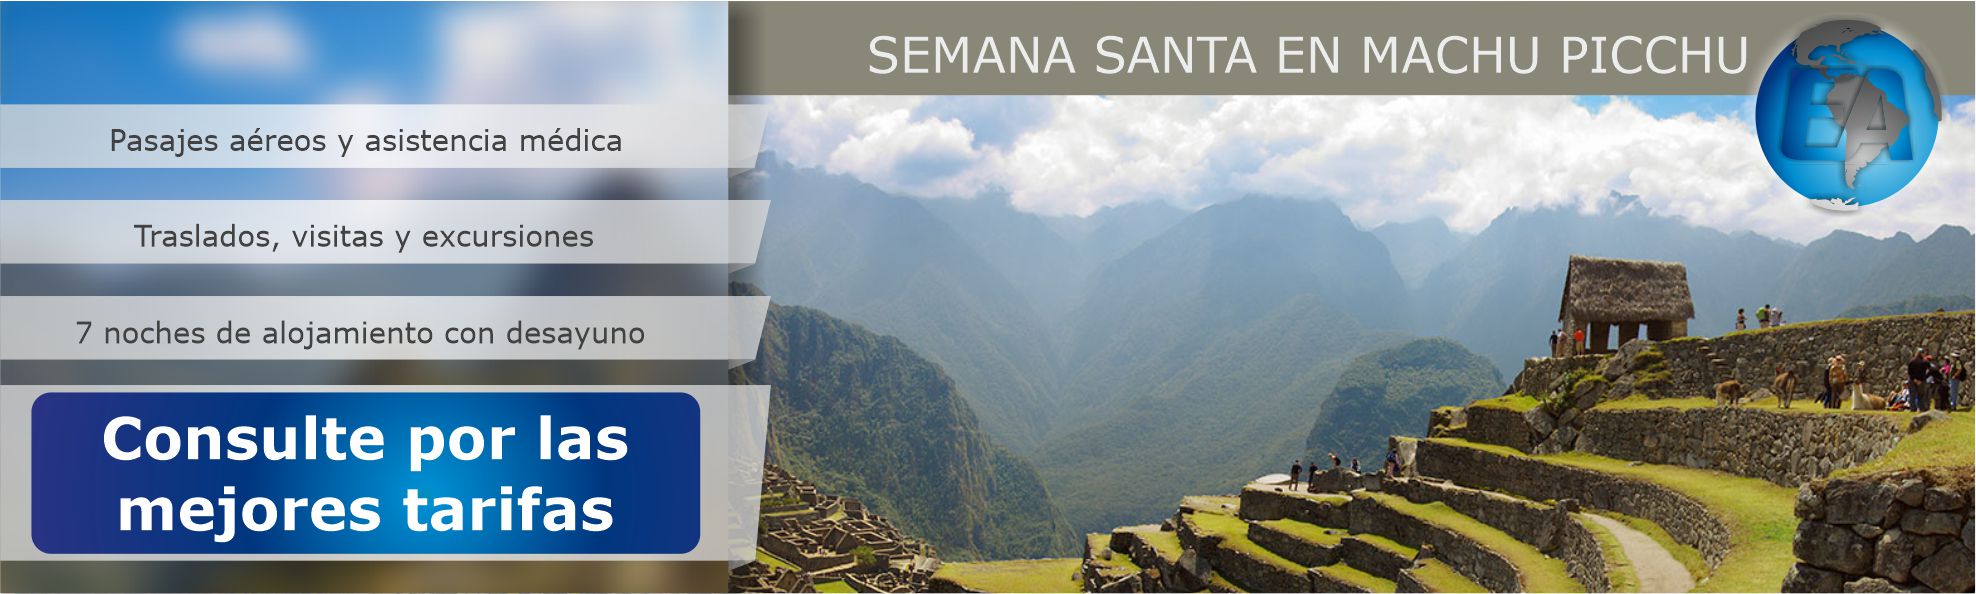 Semana Santa en Machu Pichu